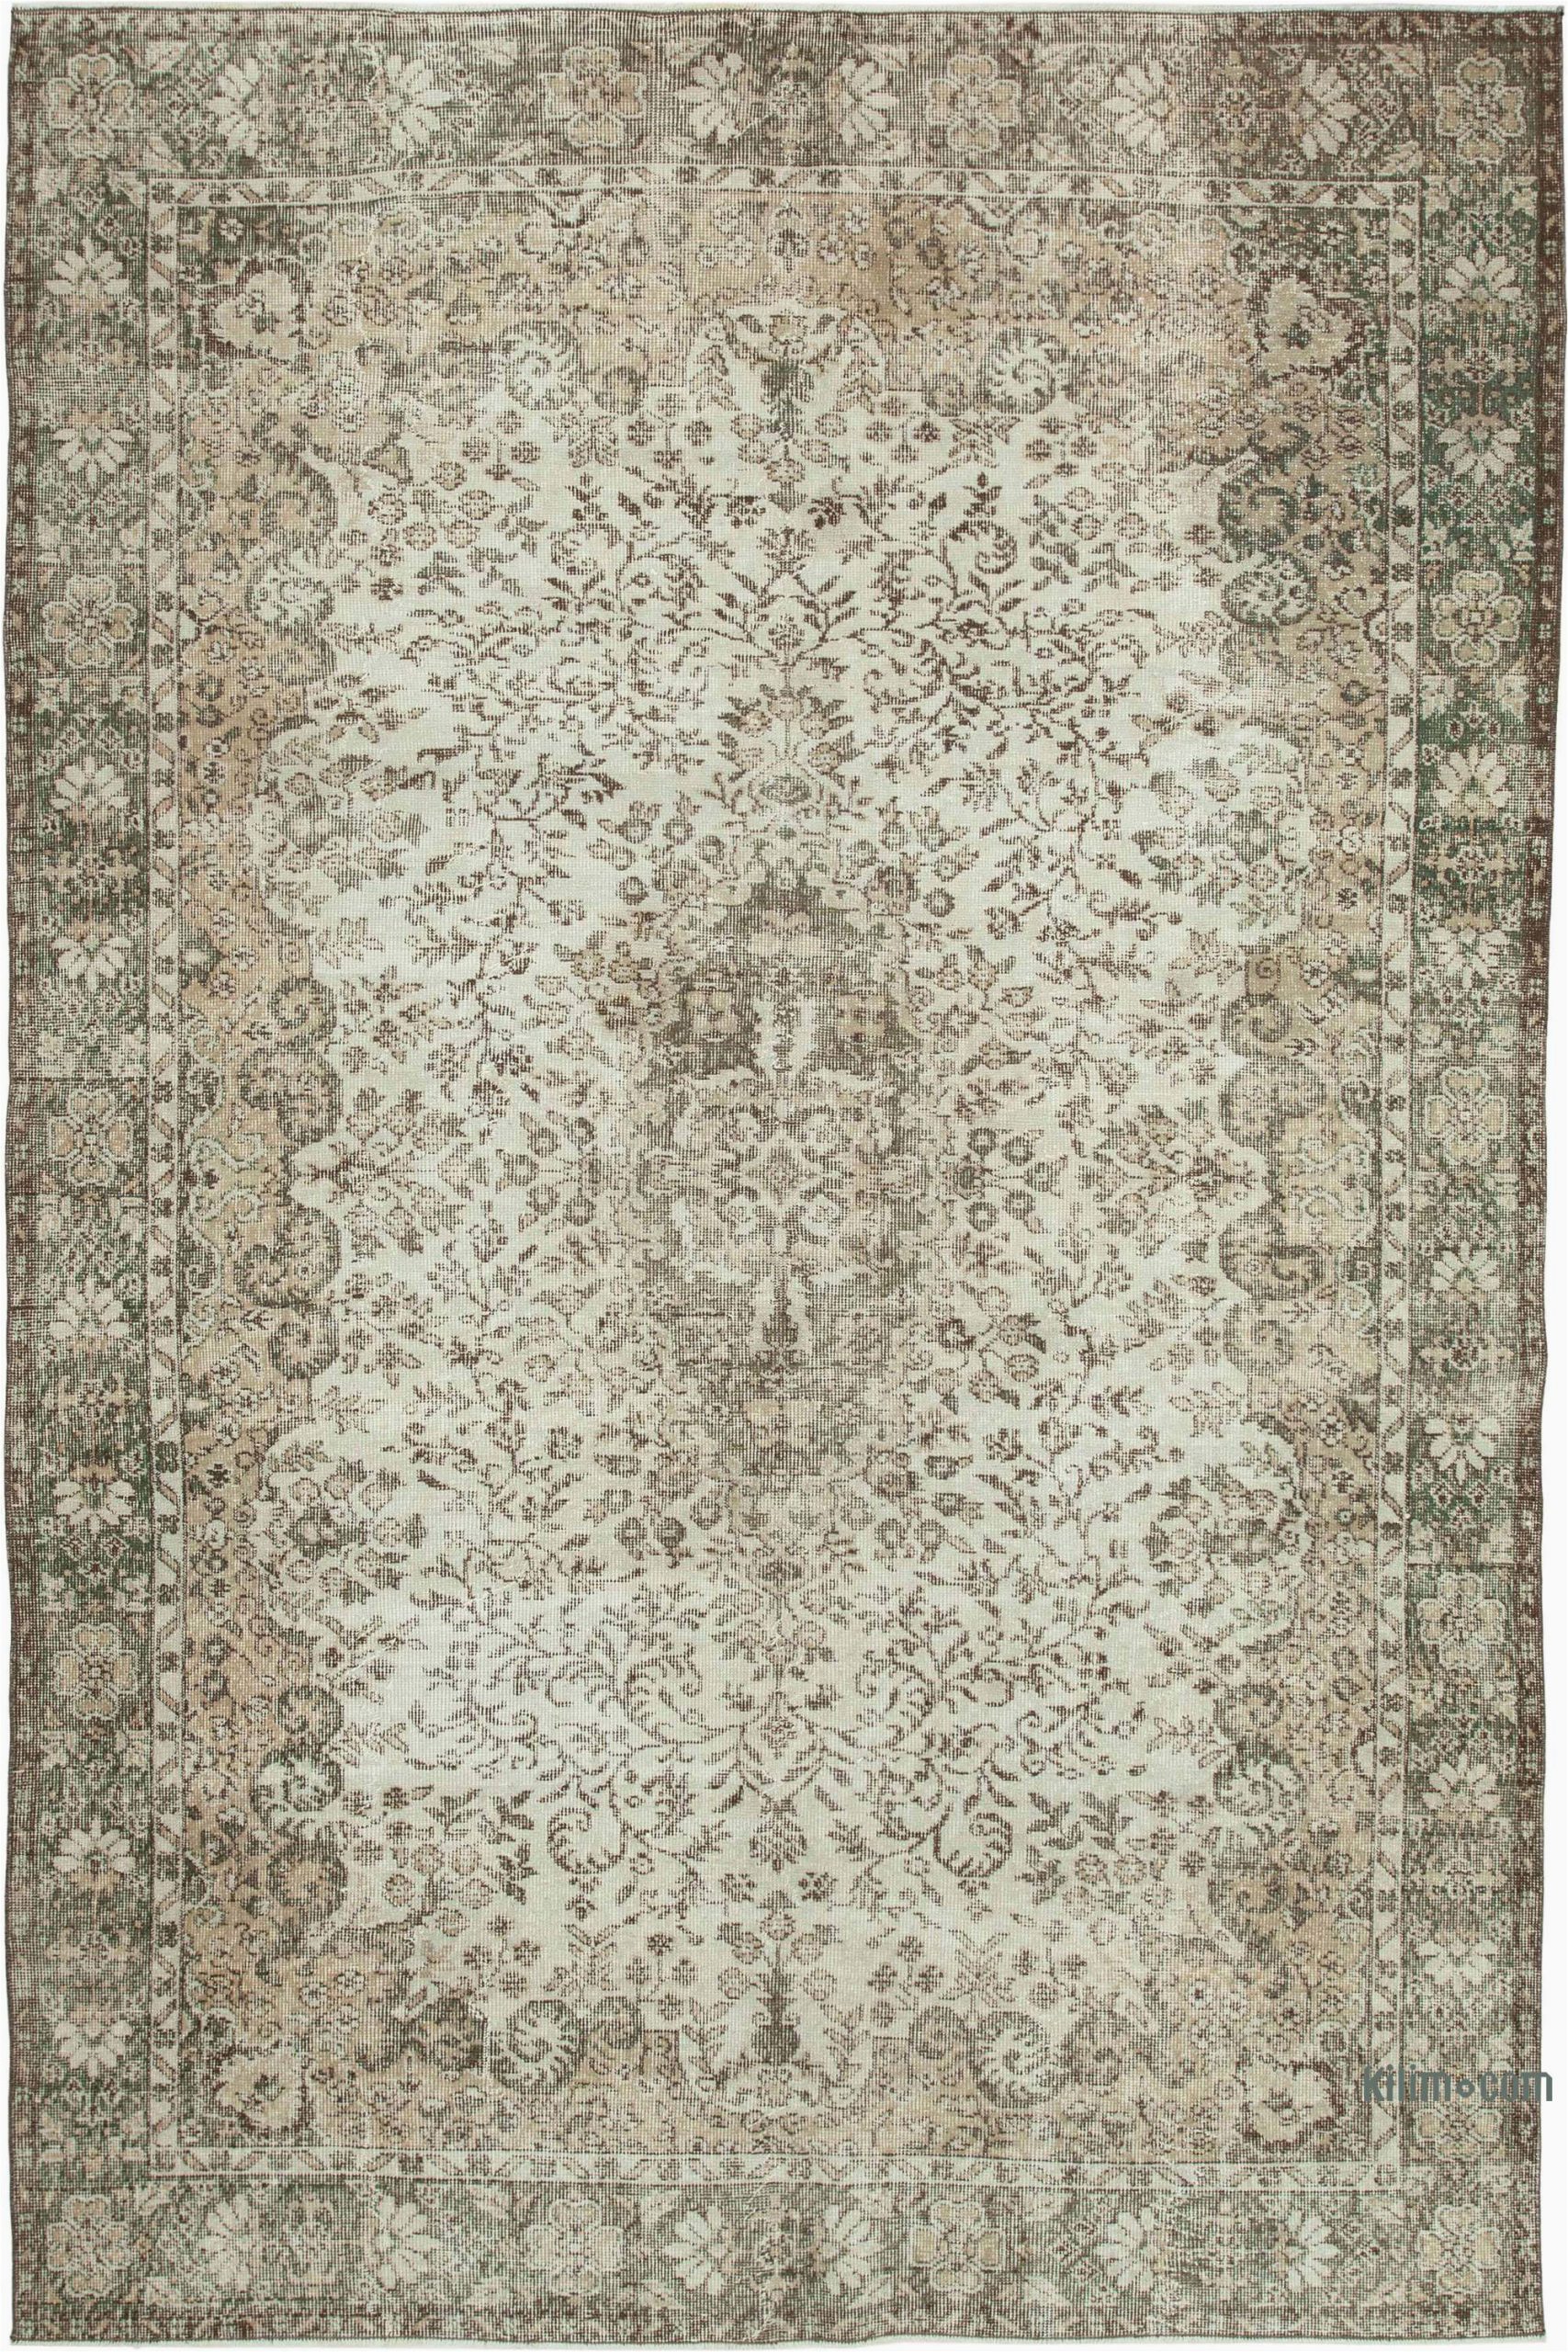 k vintage turkish hand knotted area rug